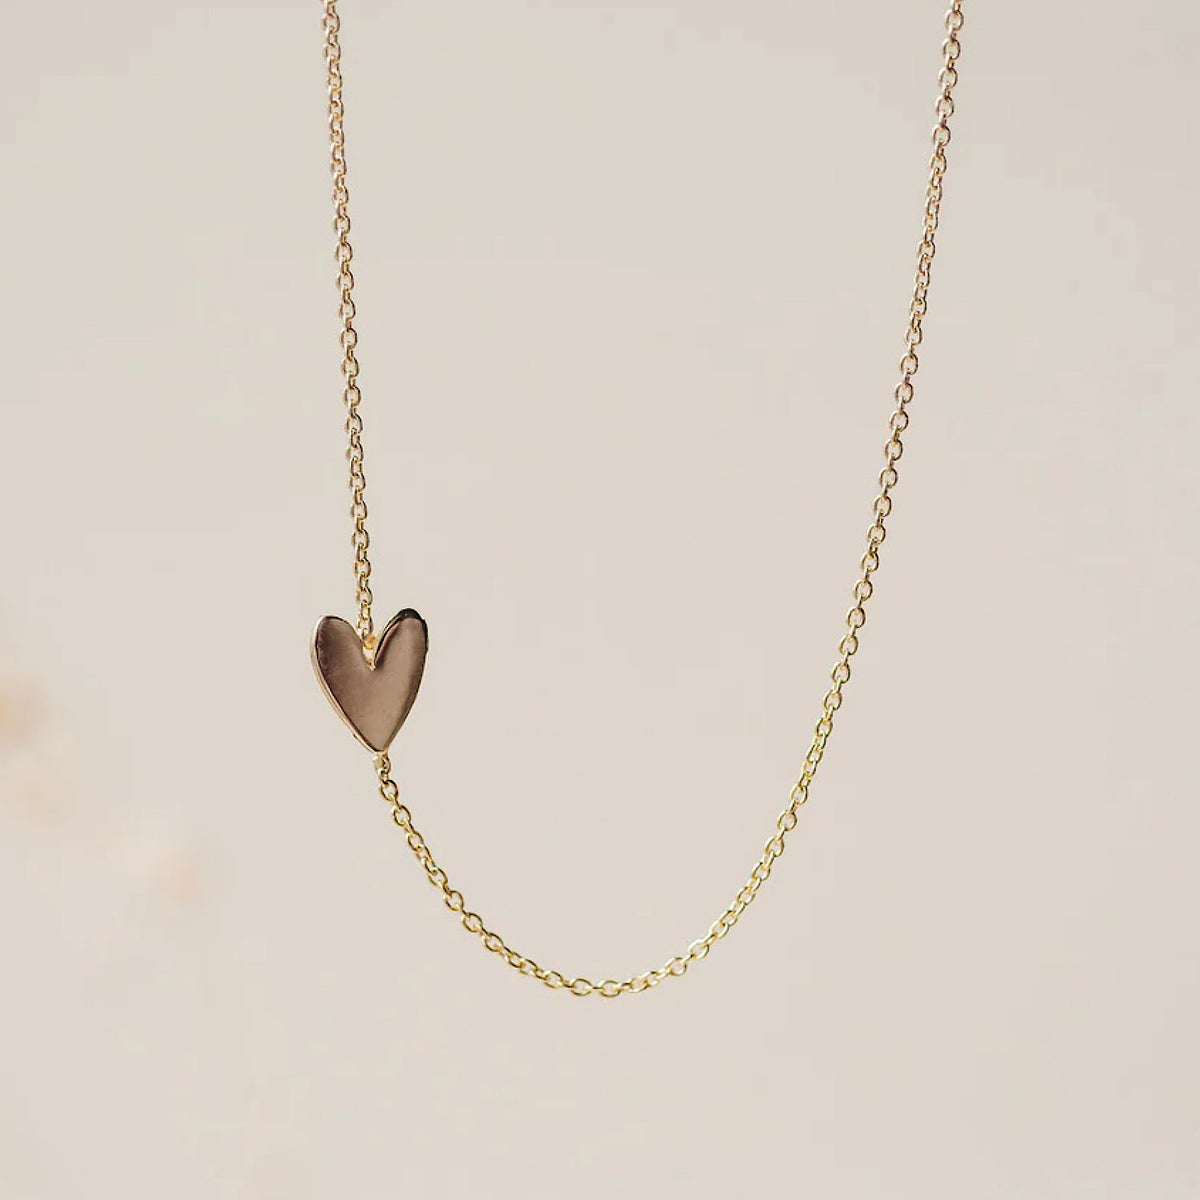 Everyday Little Lovely Heart Necklace, 14k